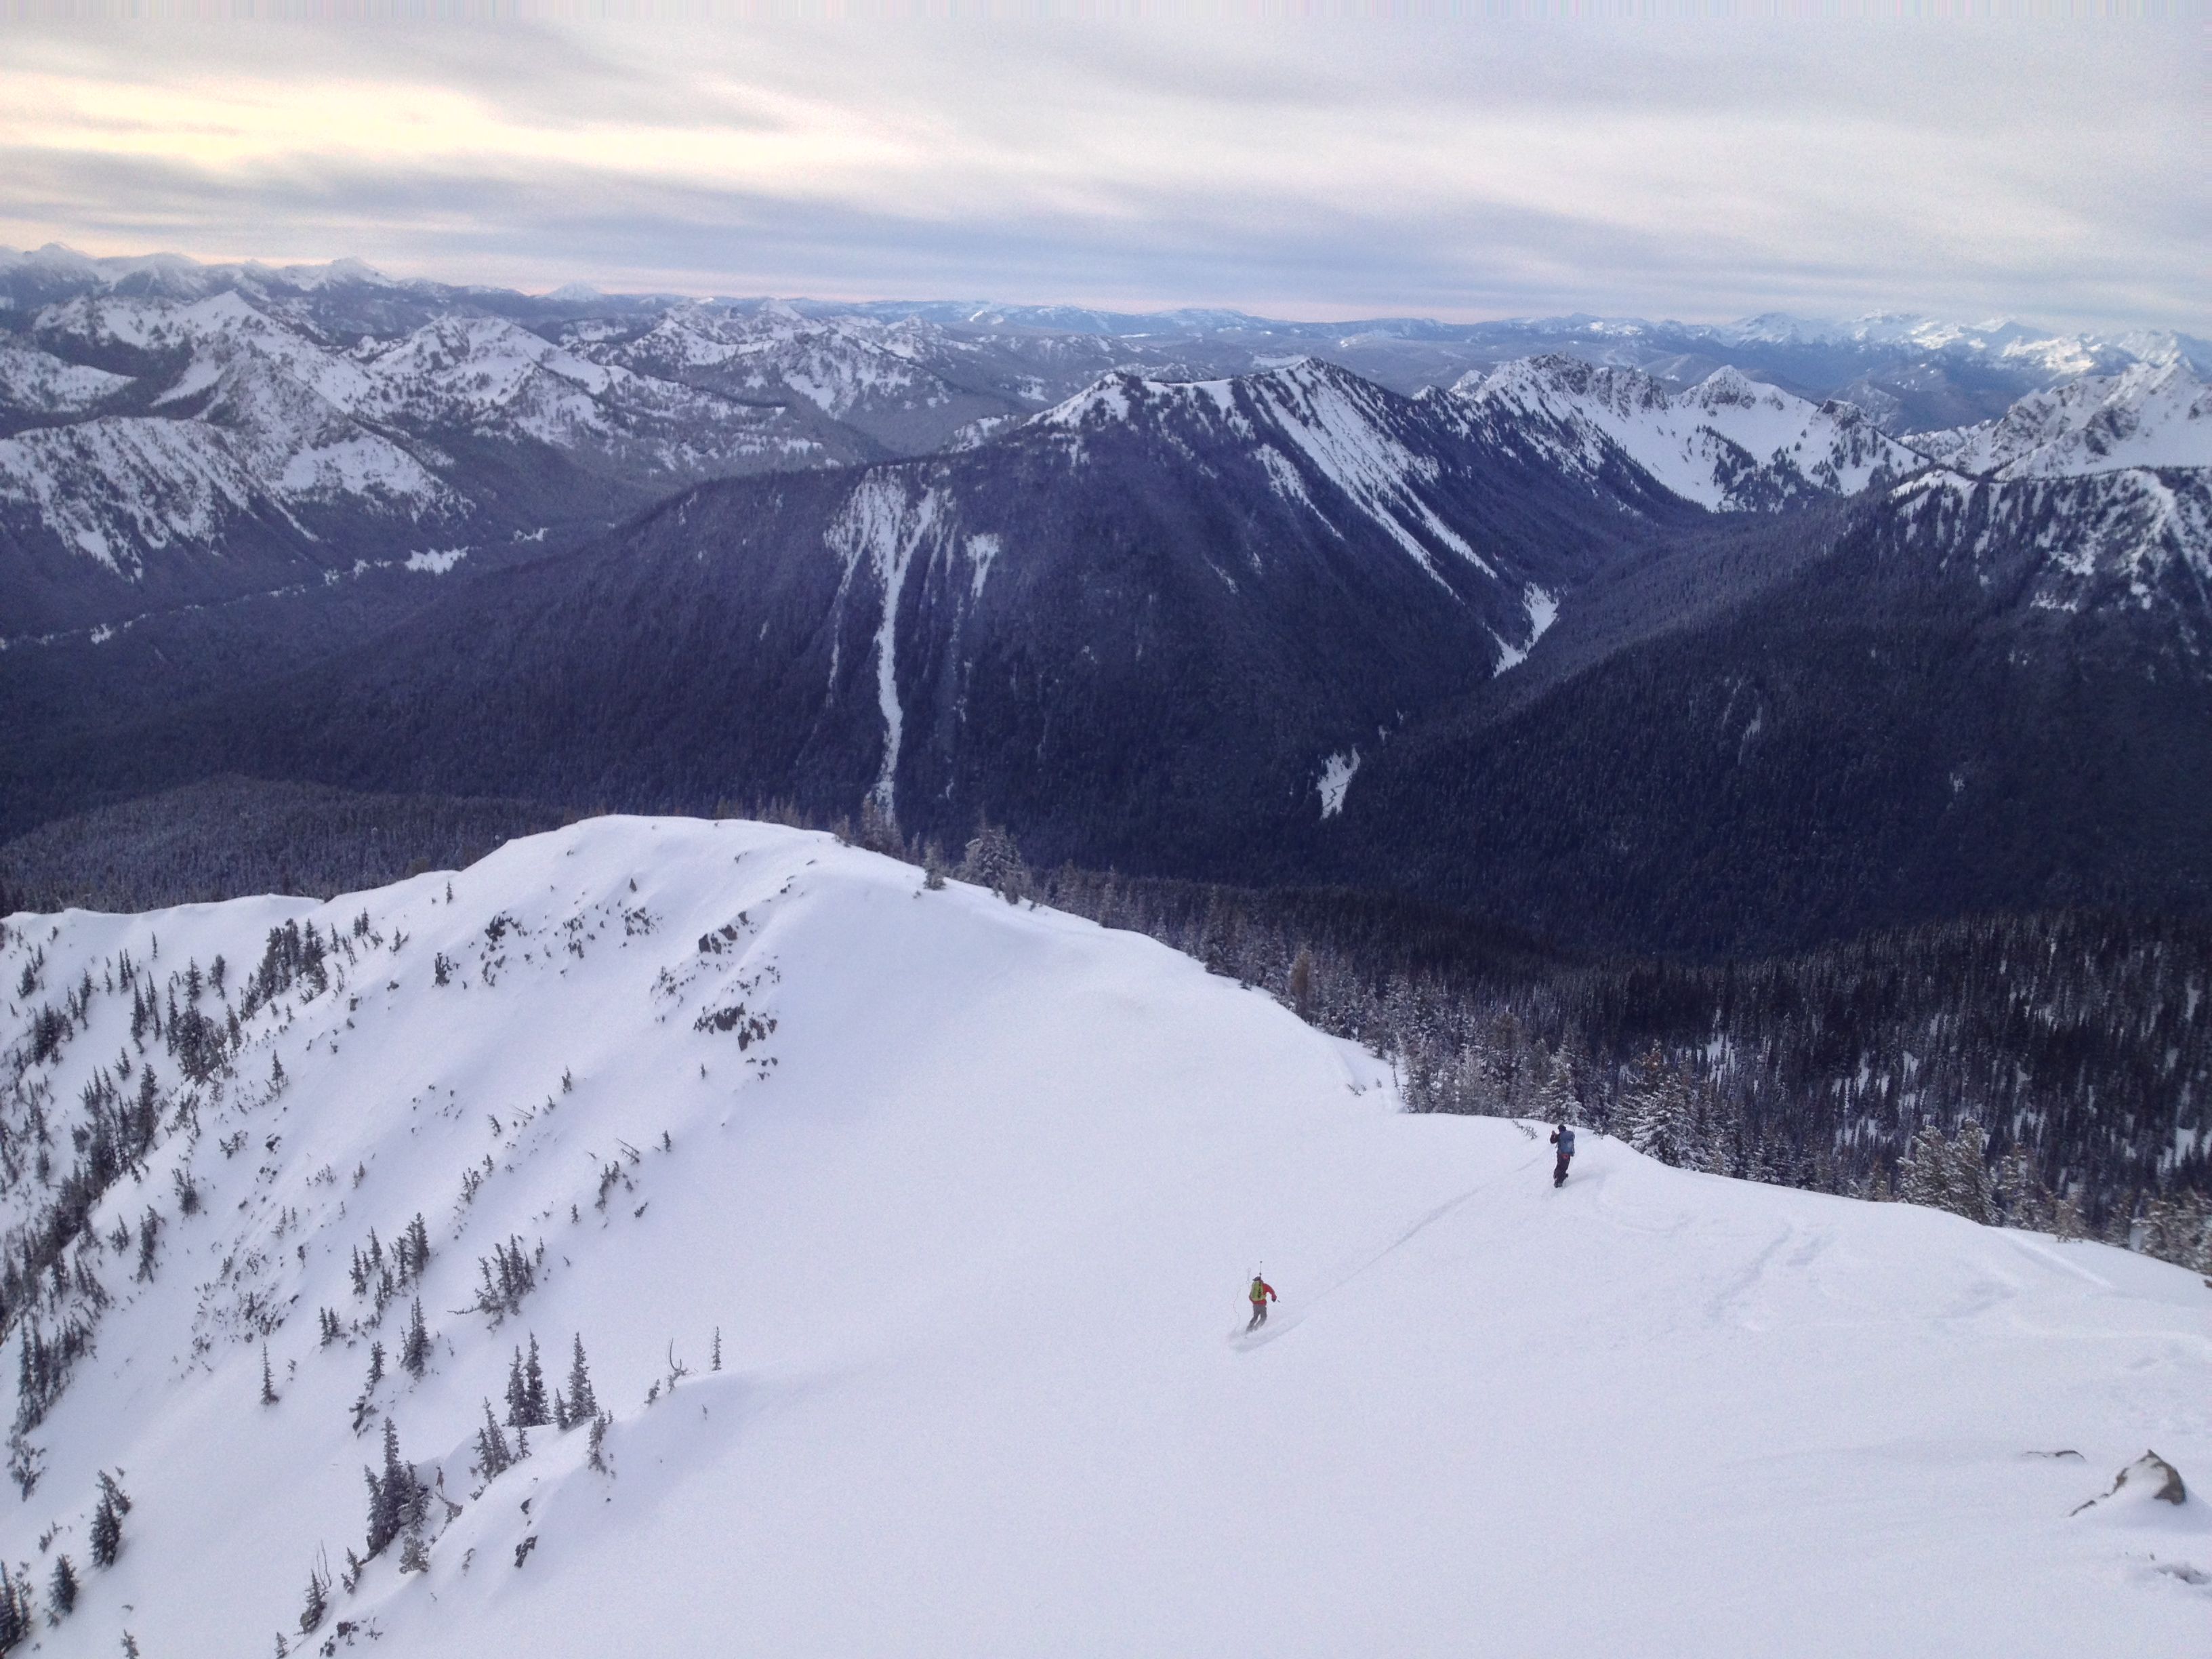 Snowboarding into the NE face of Dege Peak